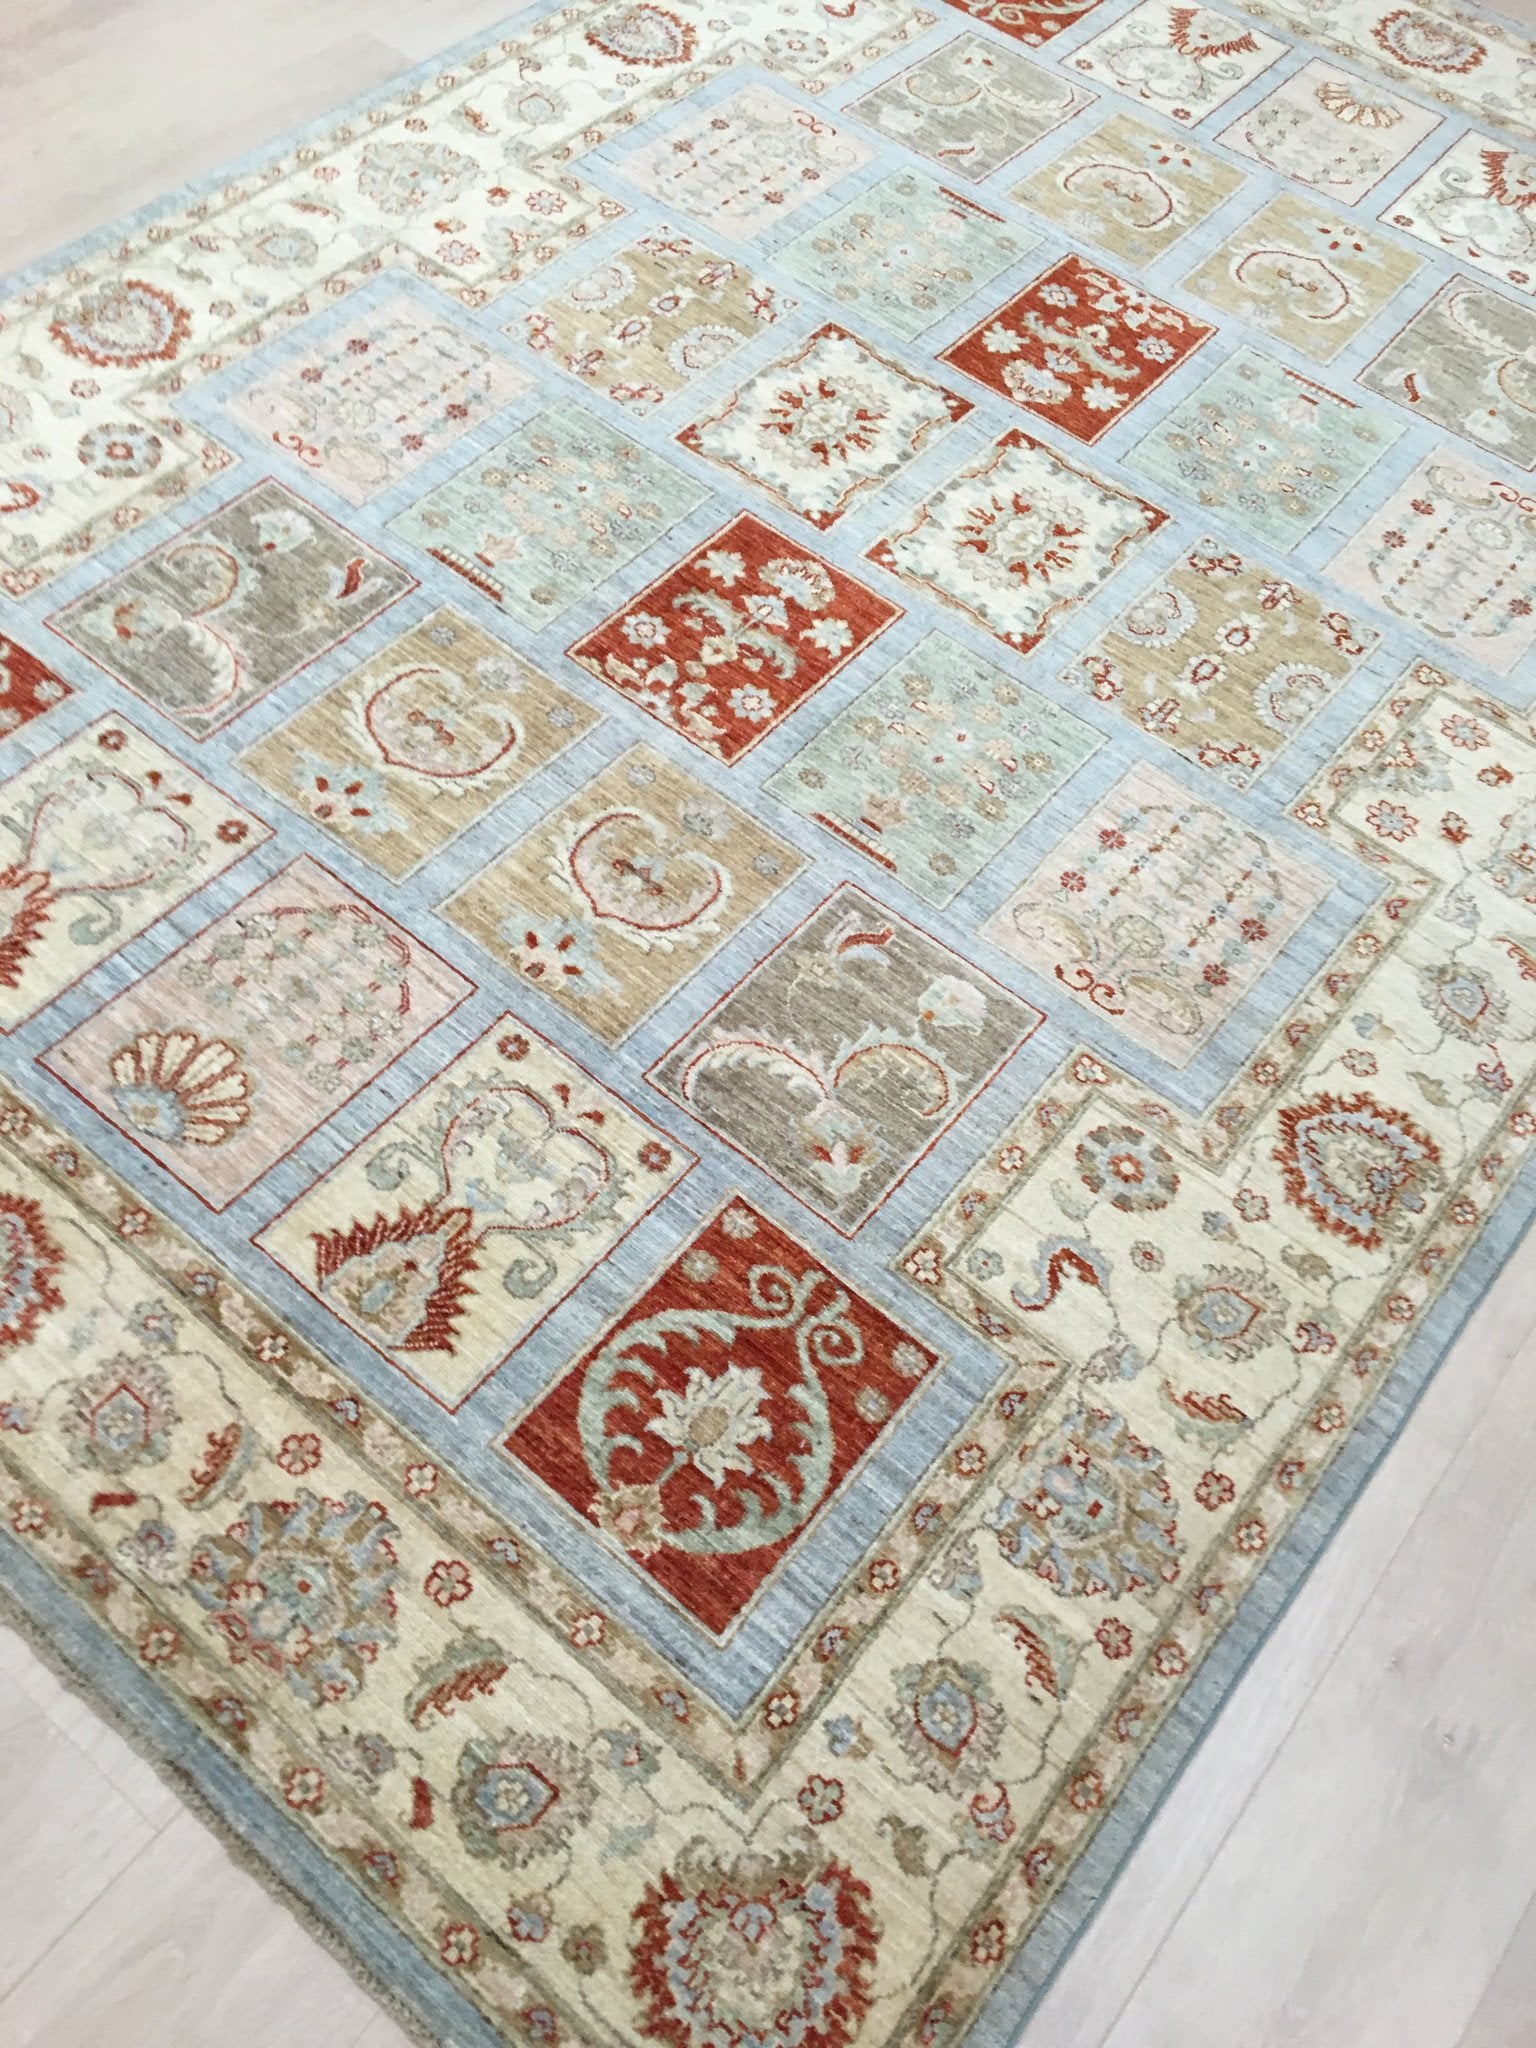 Chobi Bakhtiari 301x202 - Omid Carpets